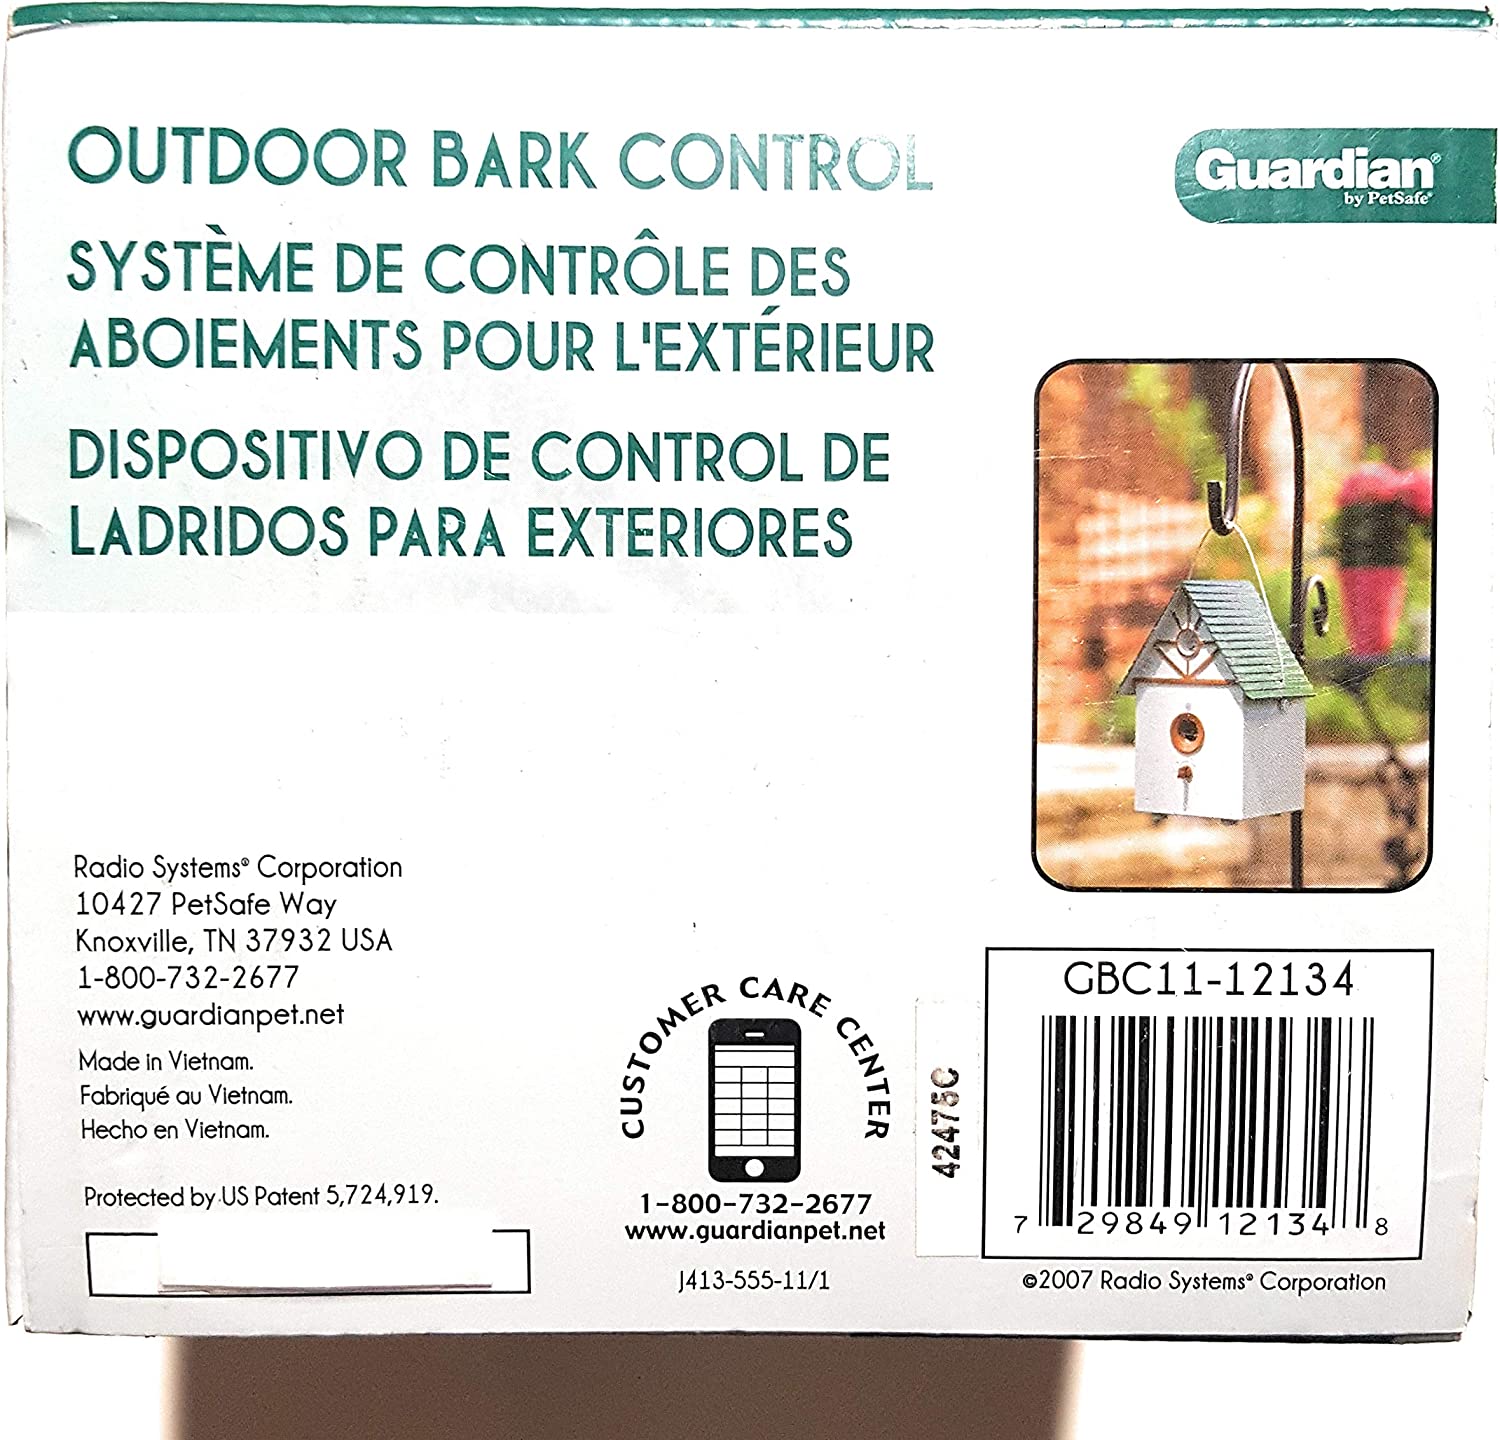 Guardian Outdoor Bark Control  -- (LNC)